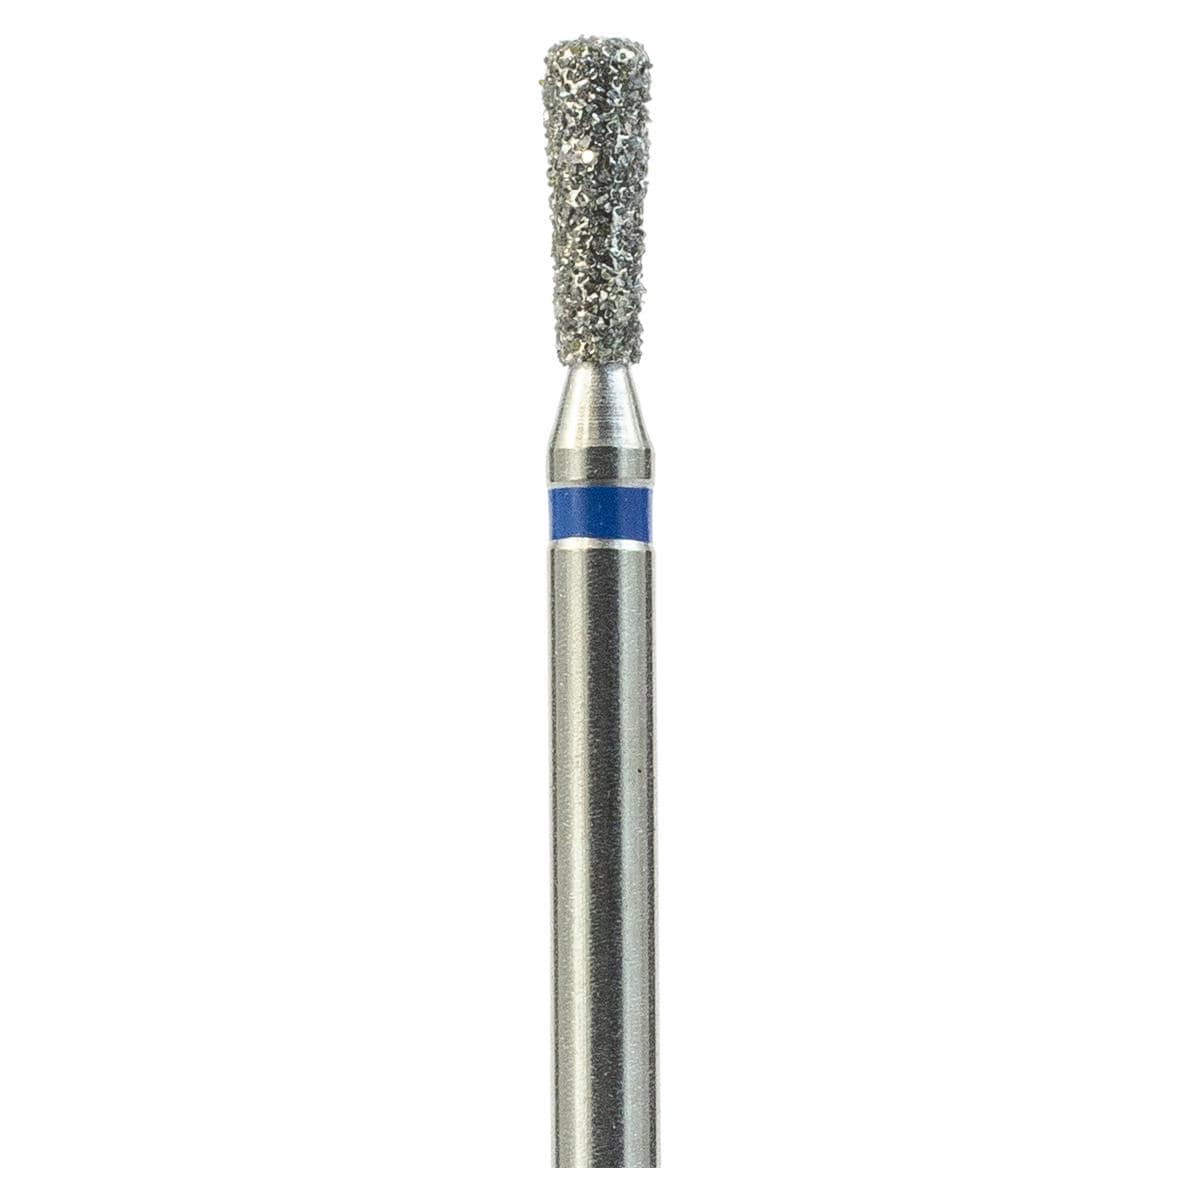 FG-Diamant Ultimate R-D, Birne, Form 830L - ISO 016, mittel (blau), Kopflänge 5 mm, Packung 5 Stück